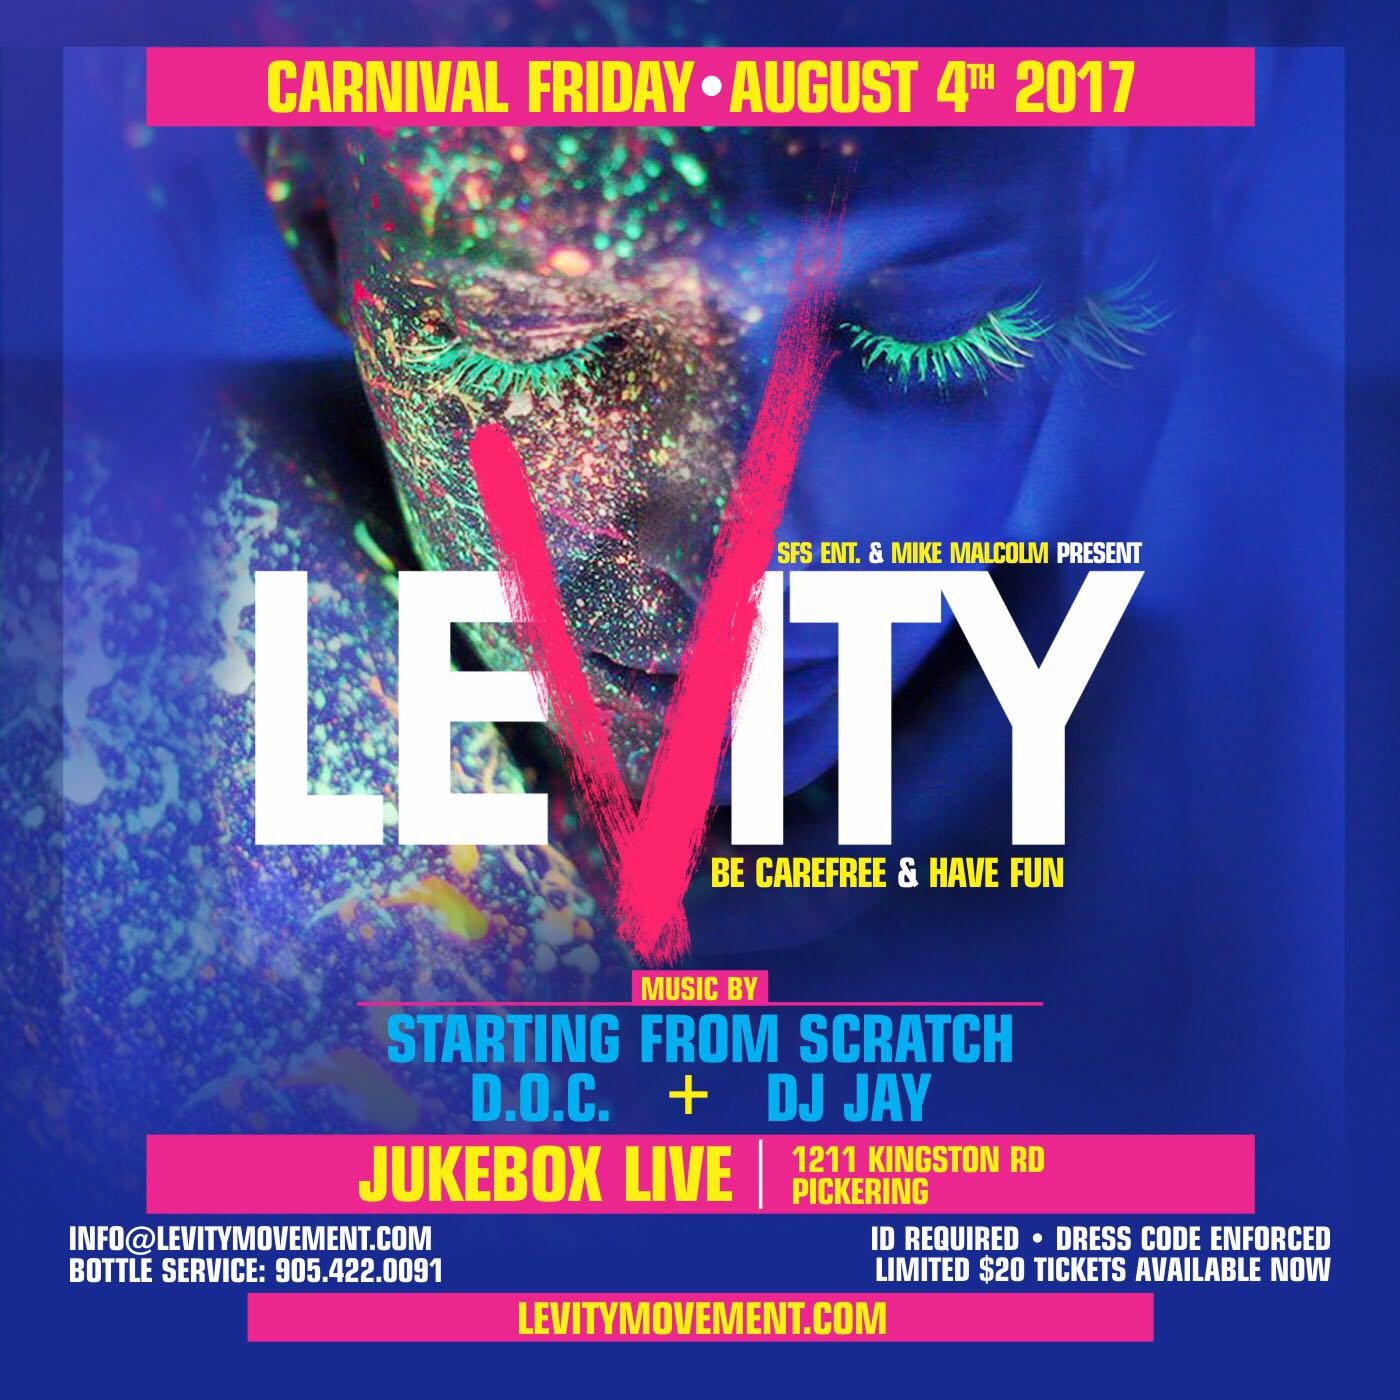 LEVITY | A Night of Fun & Frivolity